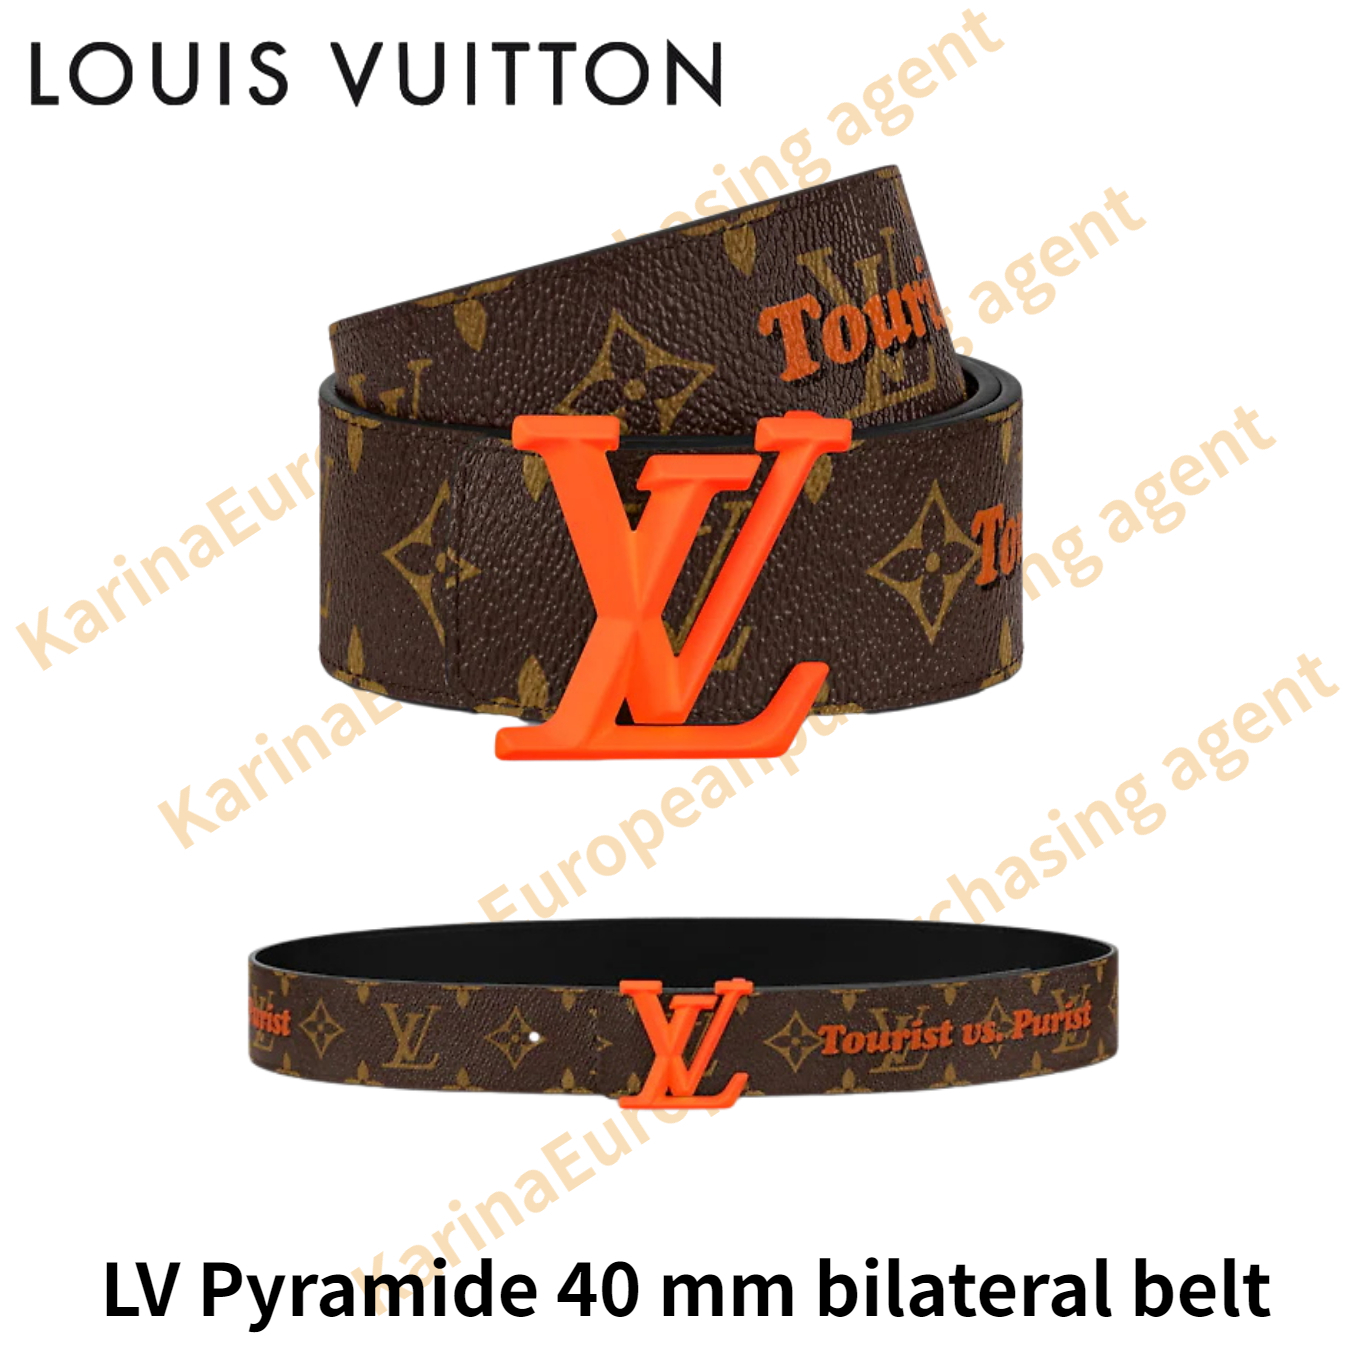 LV Pyramide 40 mm bilateral belt Louis Vuitton Classic models Made in France Orange belt